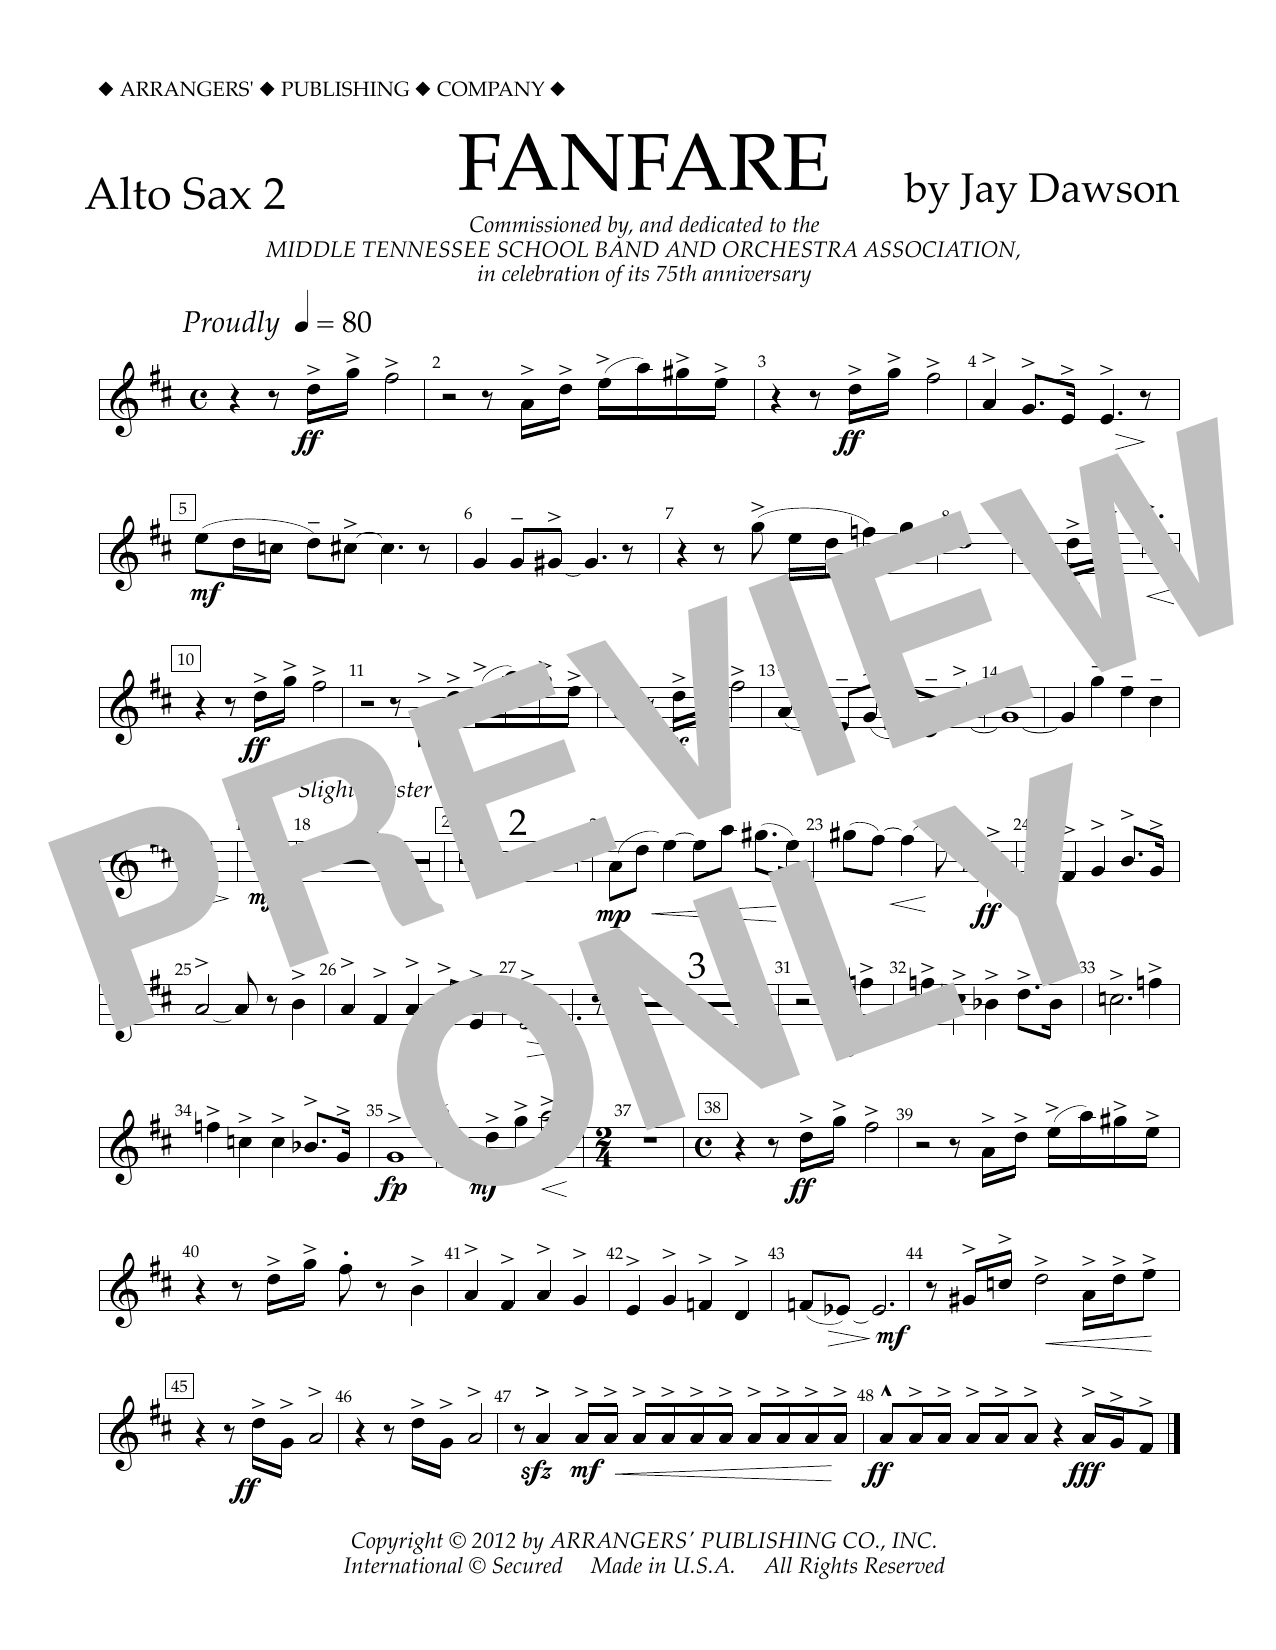 Download Jay Dawson Fanfare - Alto Sax 2 Sheet Music